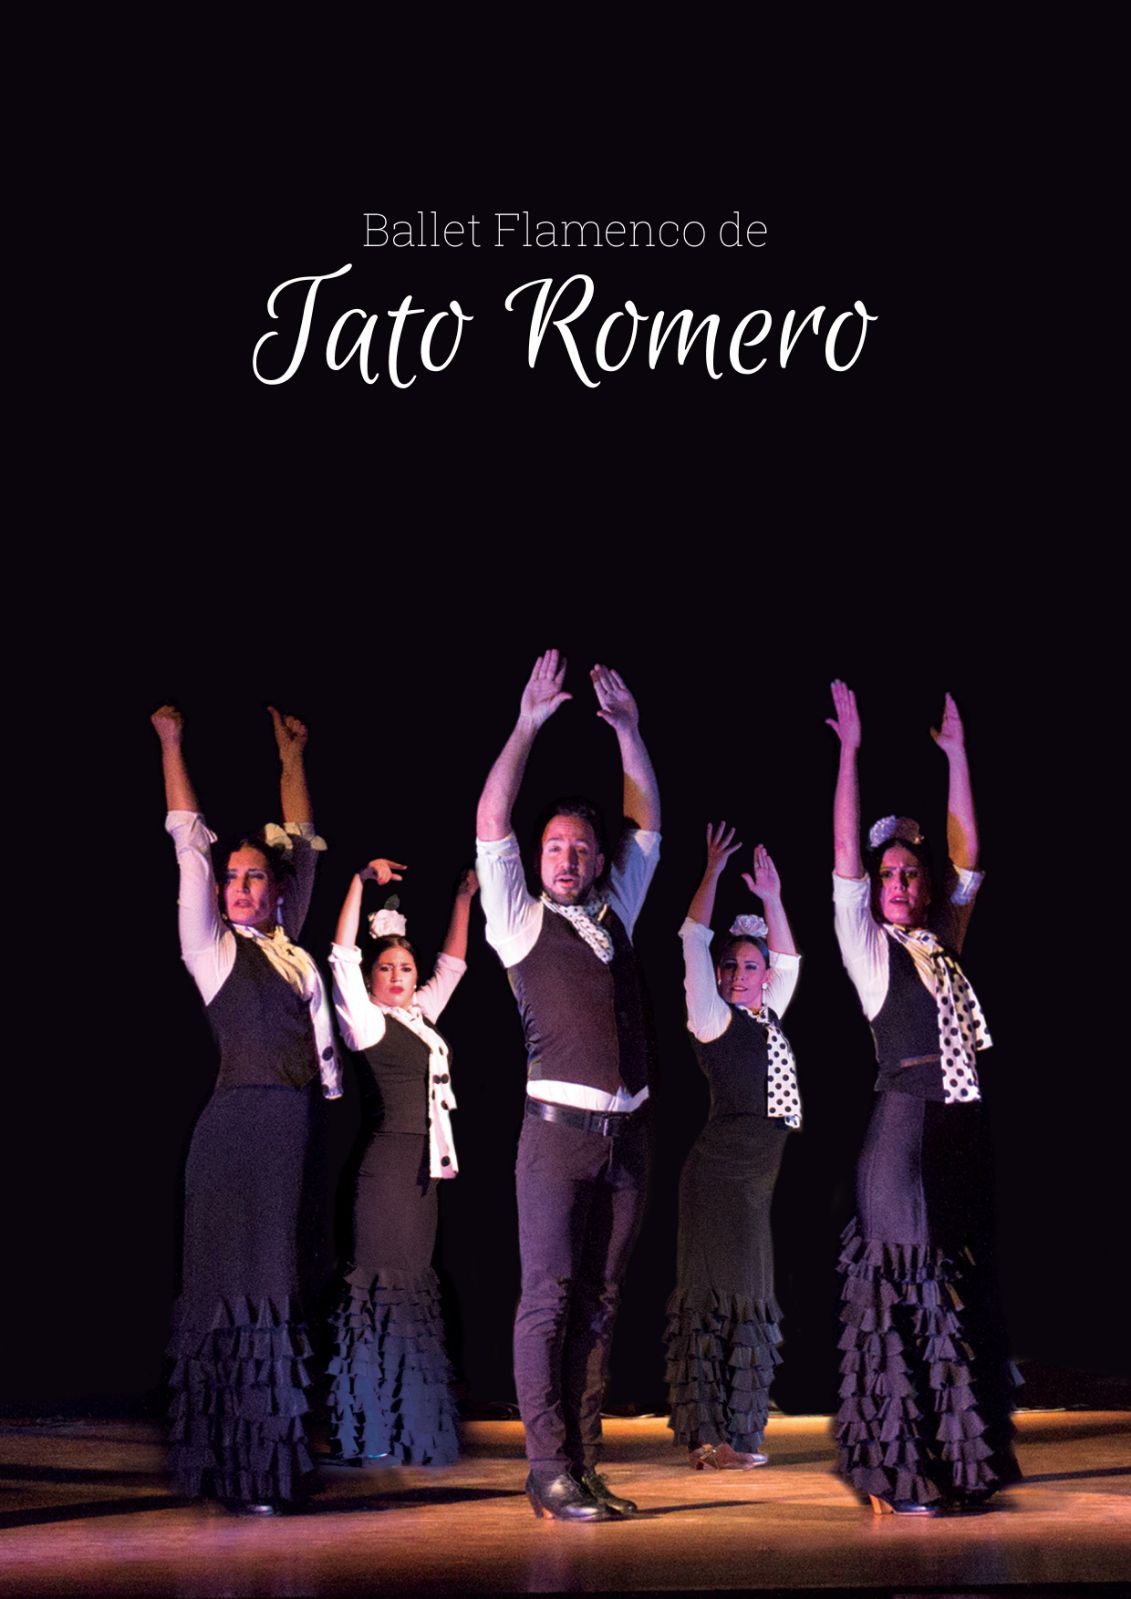 En este momento estás viendo Flamenco Tato